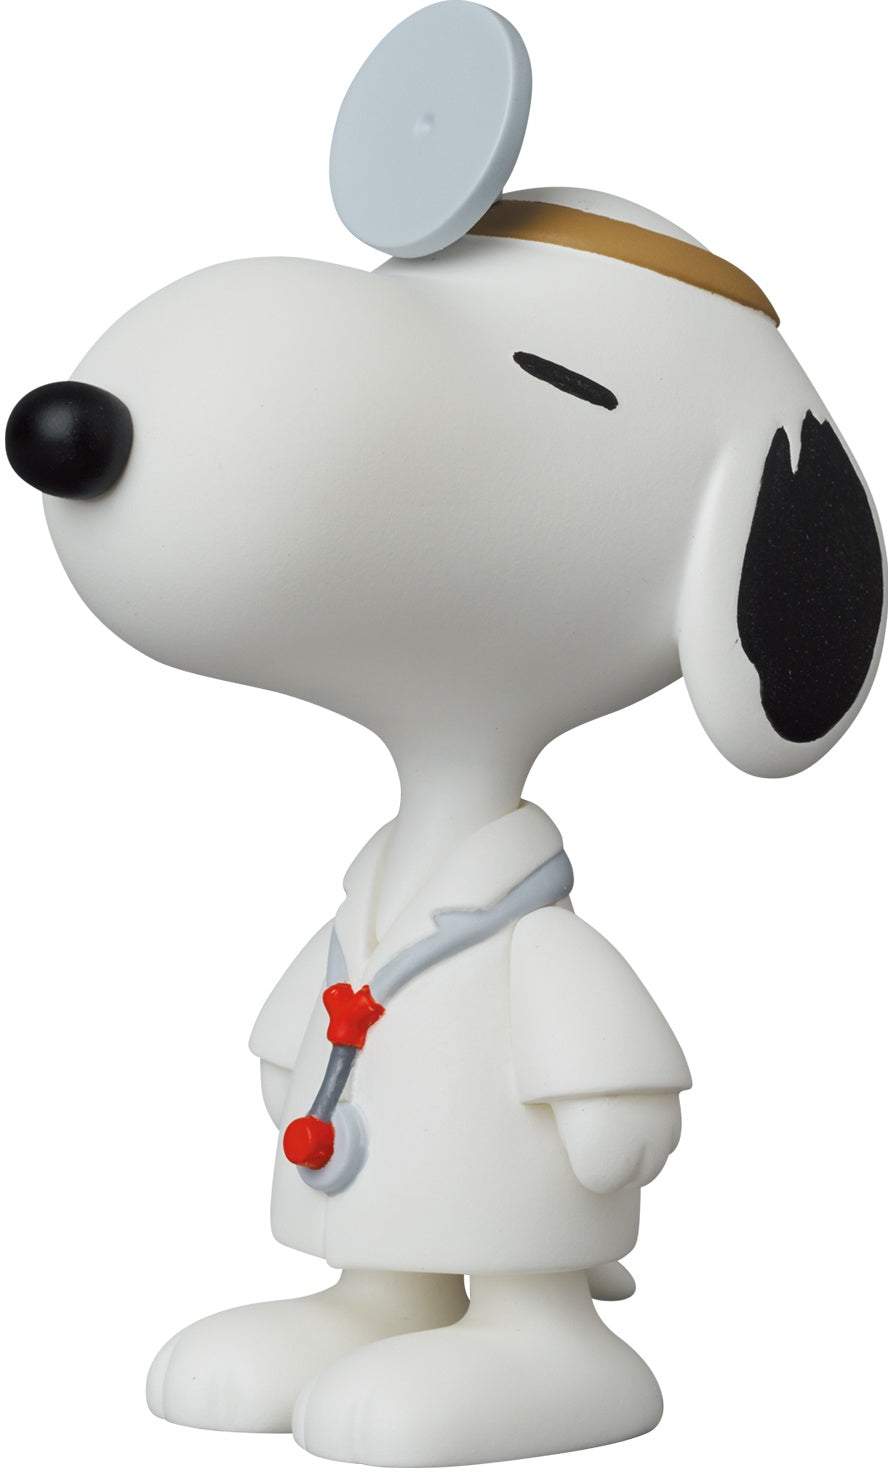 Medicom - Ultra Detail Figure No. 722 - Doctor Snoopy - Marvelous Toys